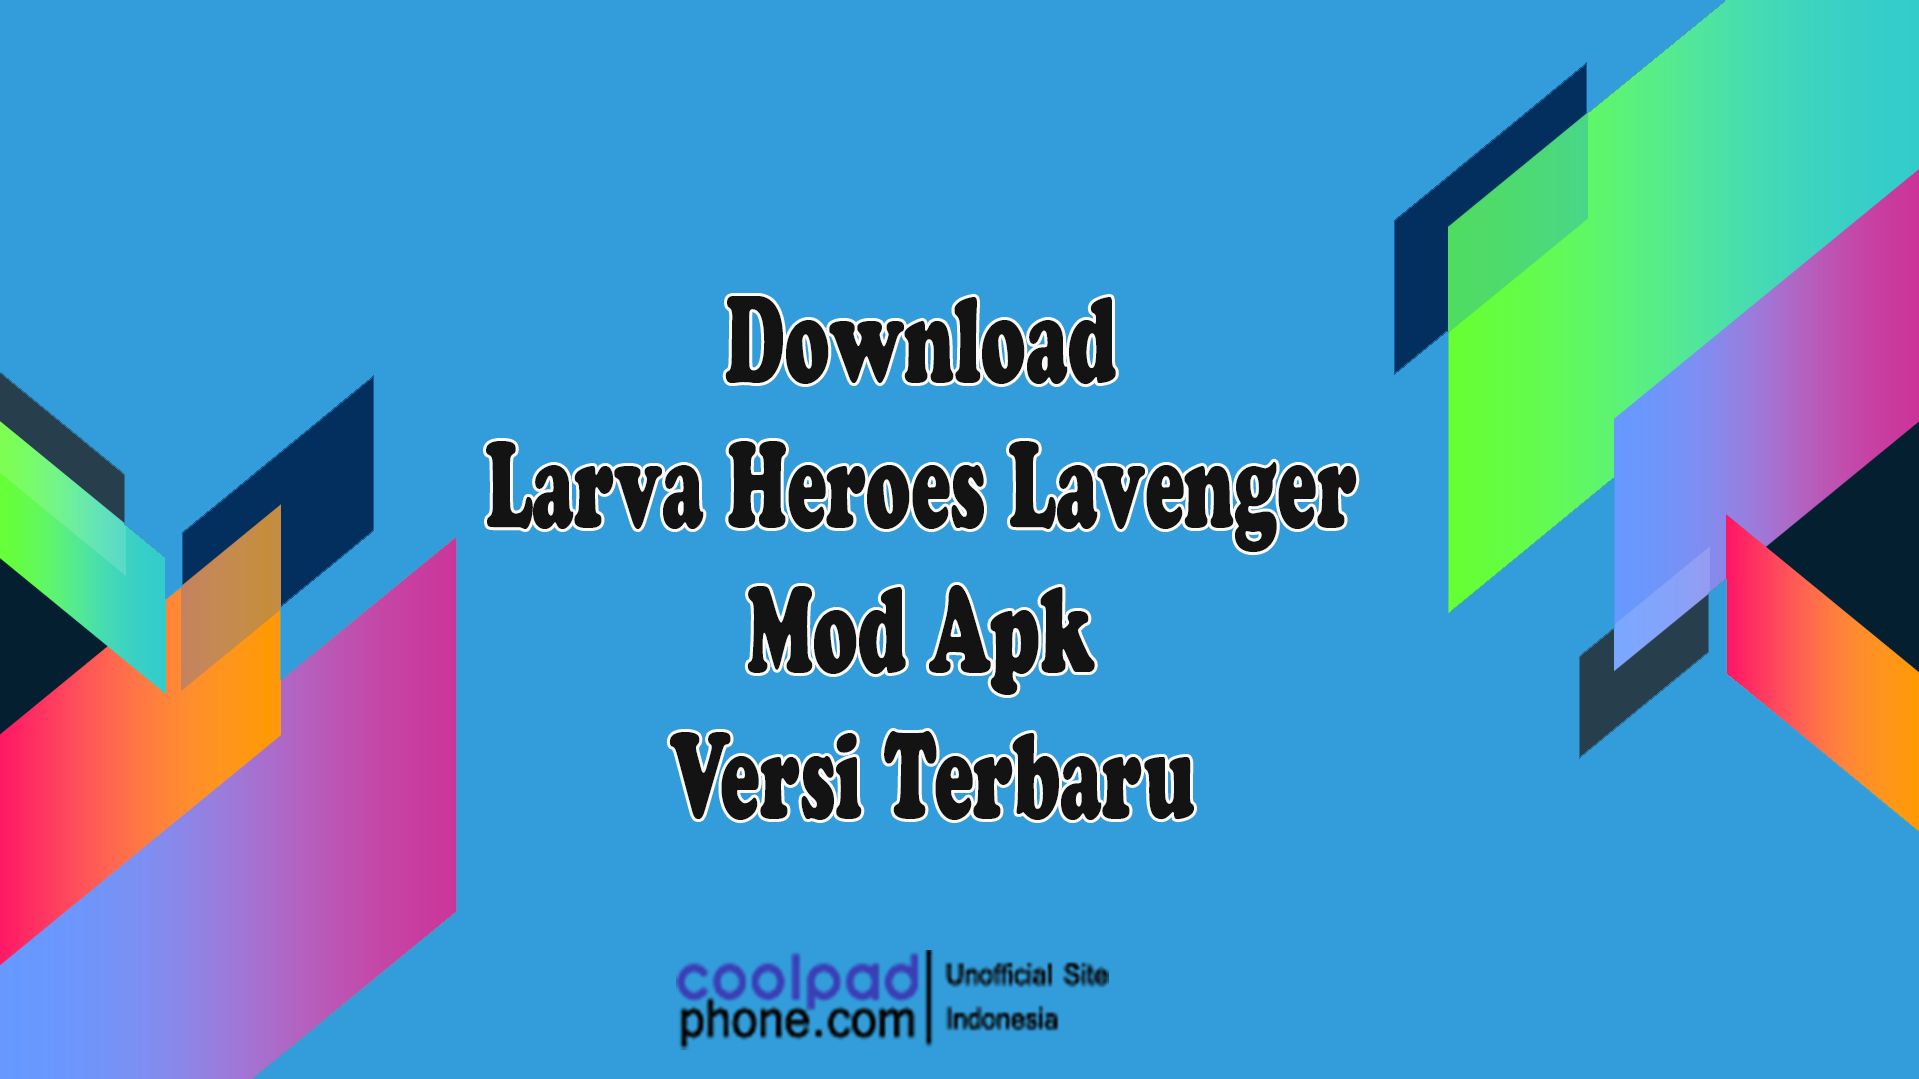 Larva-Heroes-Lavenger-Mod-Apk